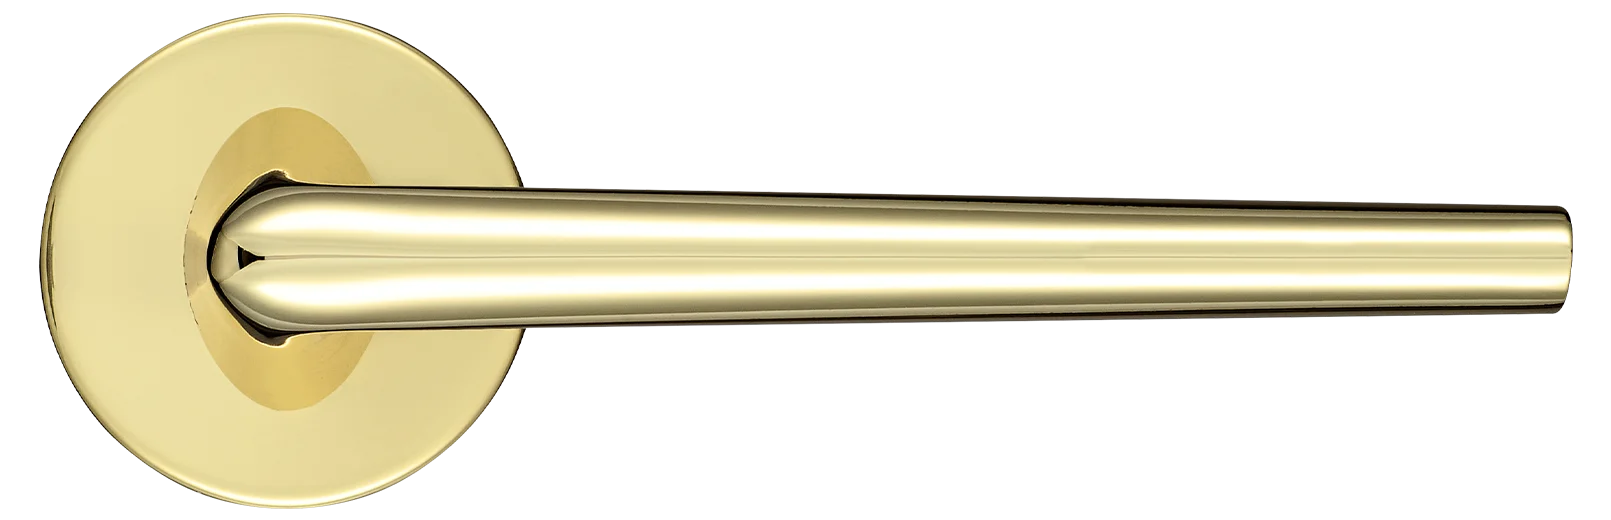 THE FORCE R5 OTL, ручка дверная, цвет - золото фото купить в Москве